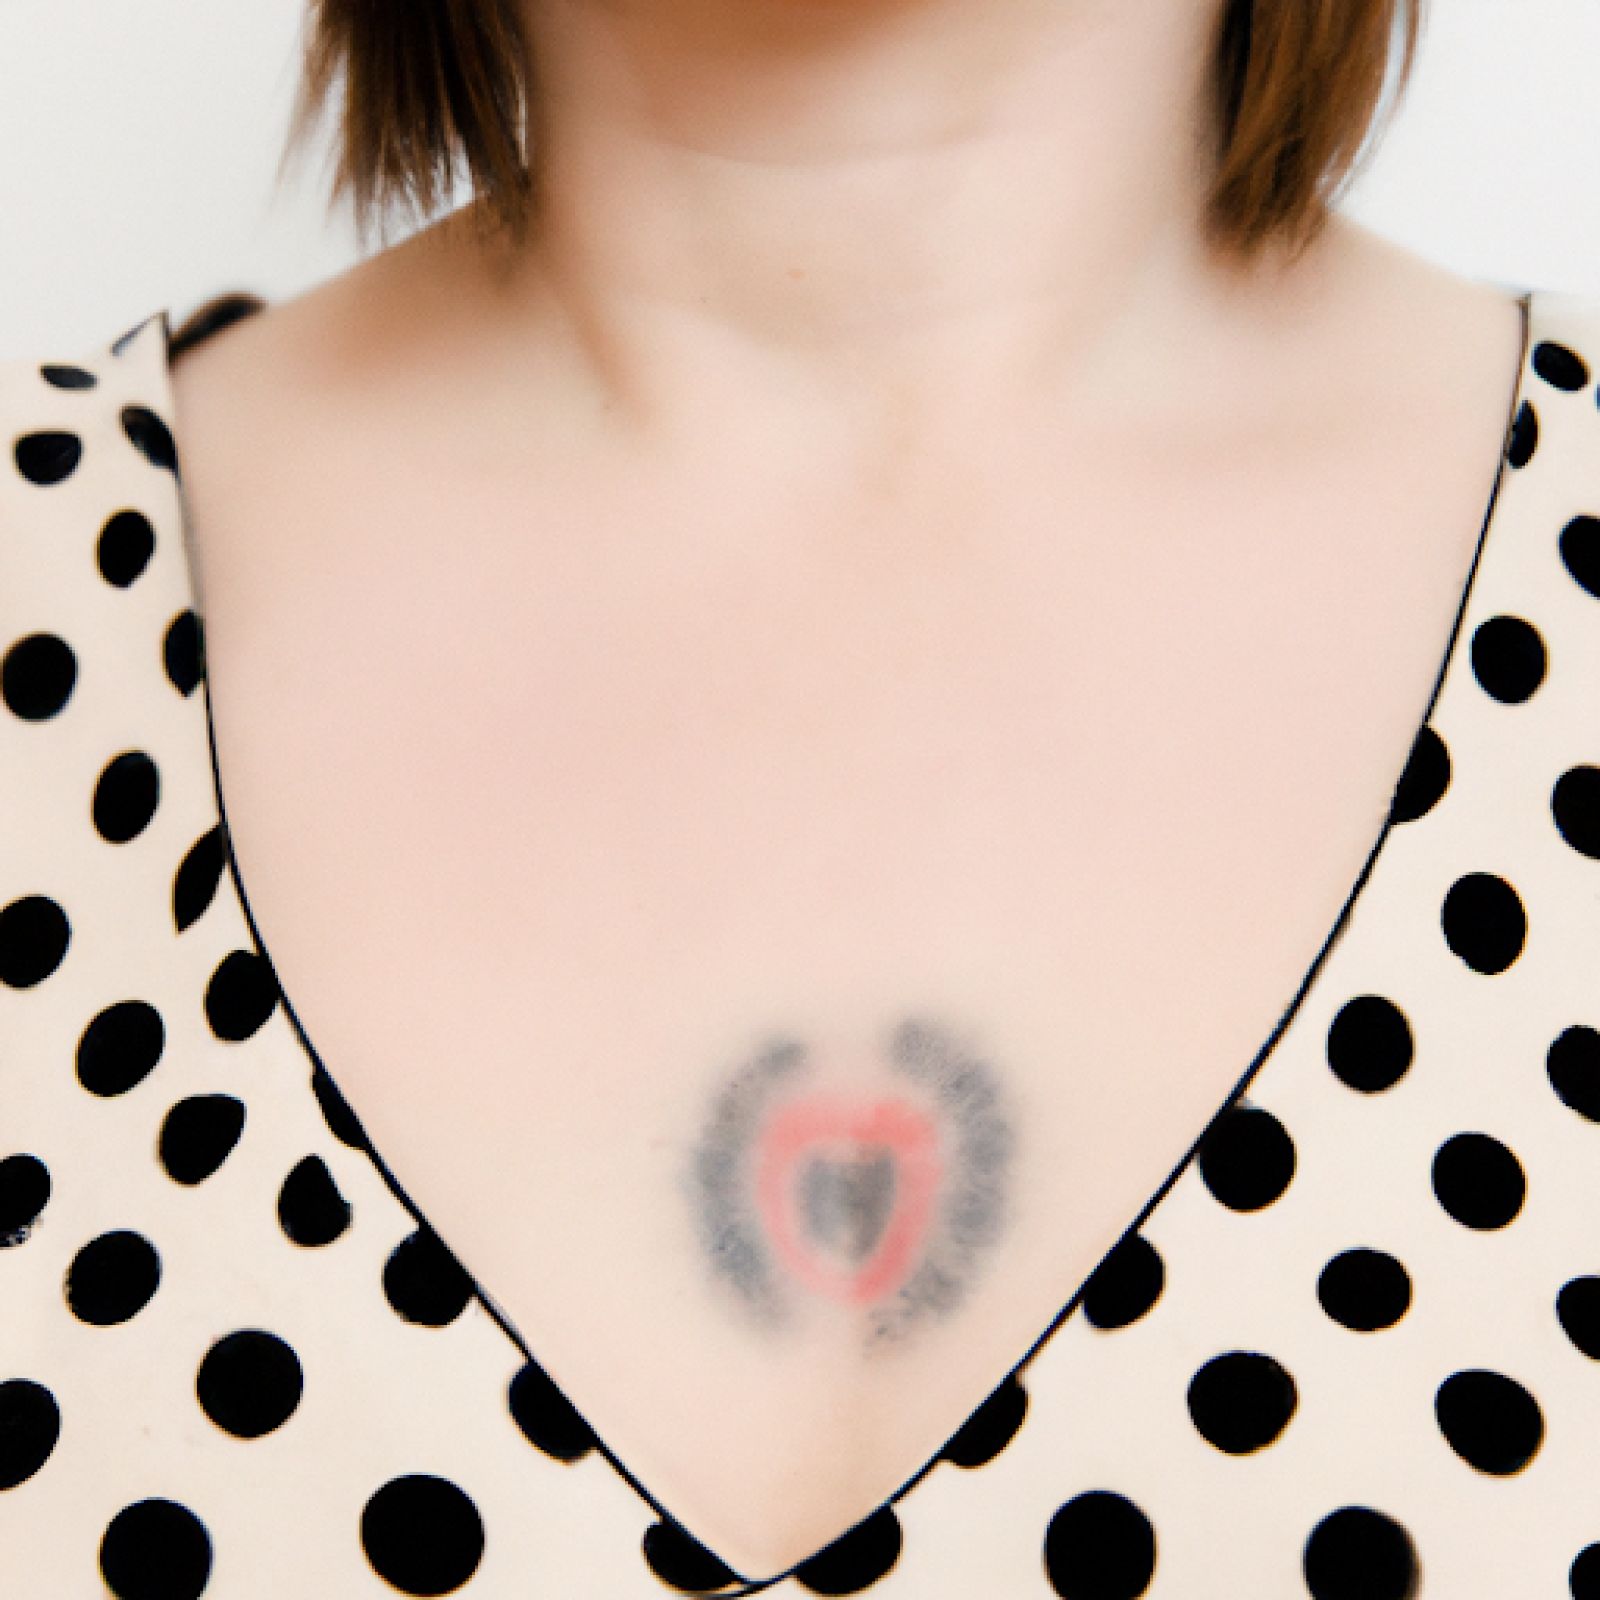 Trash polka tattoo on sternum for women